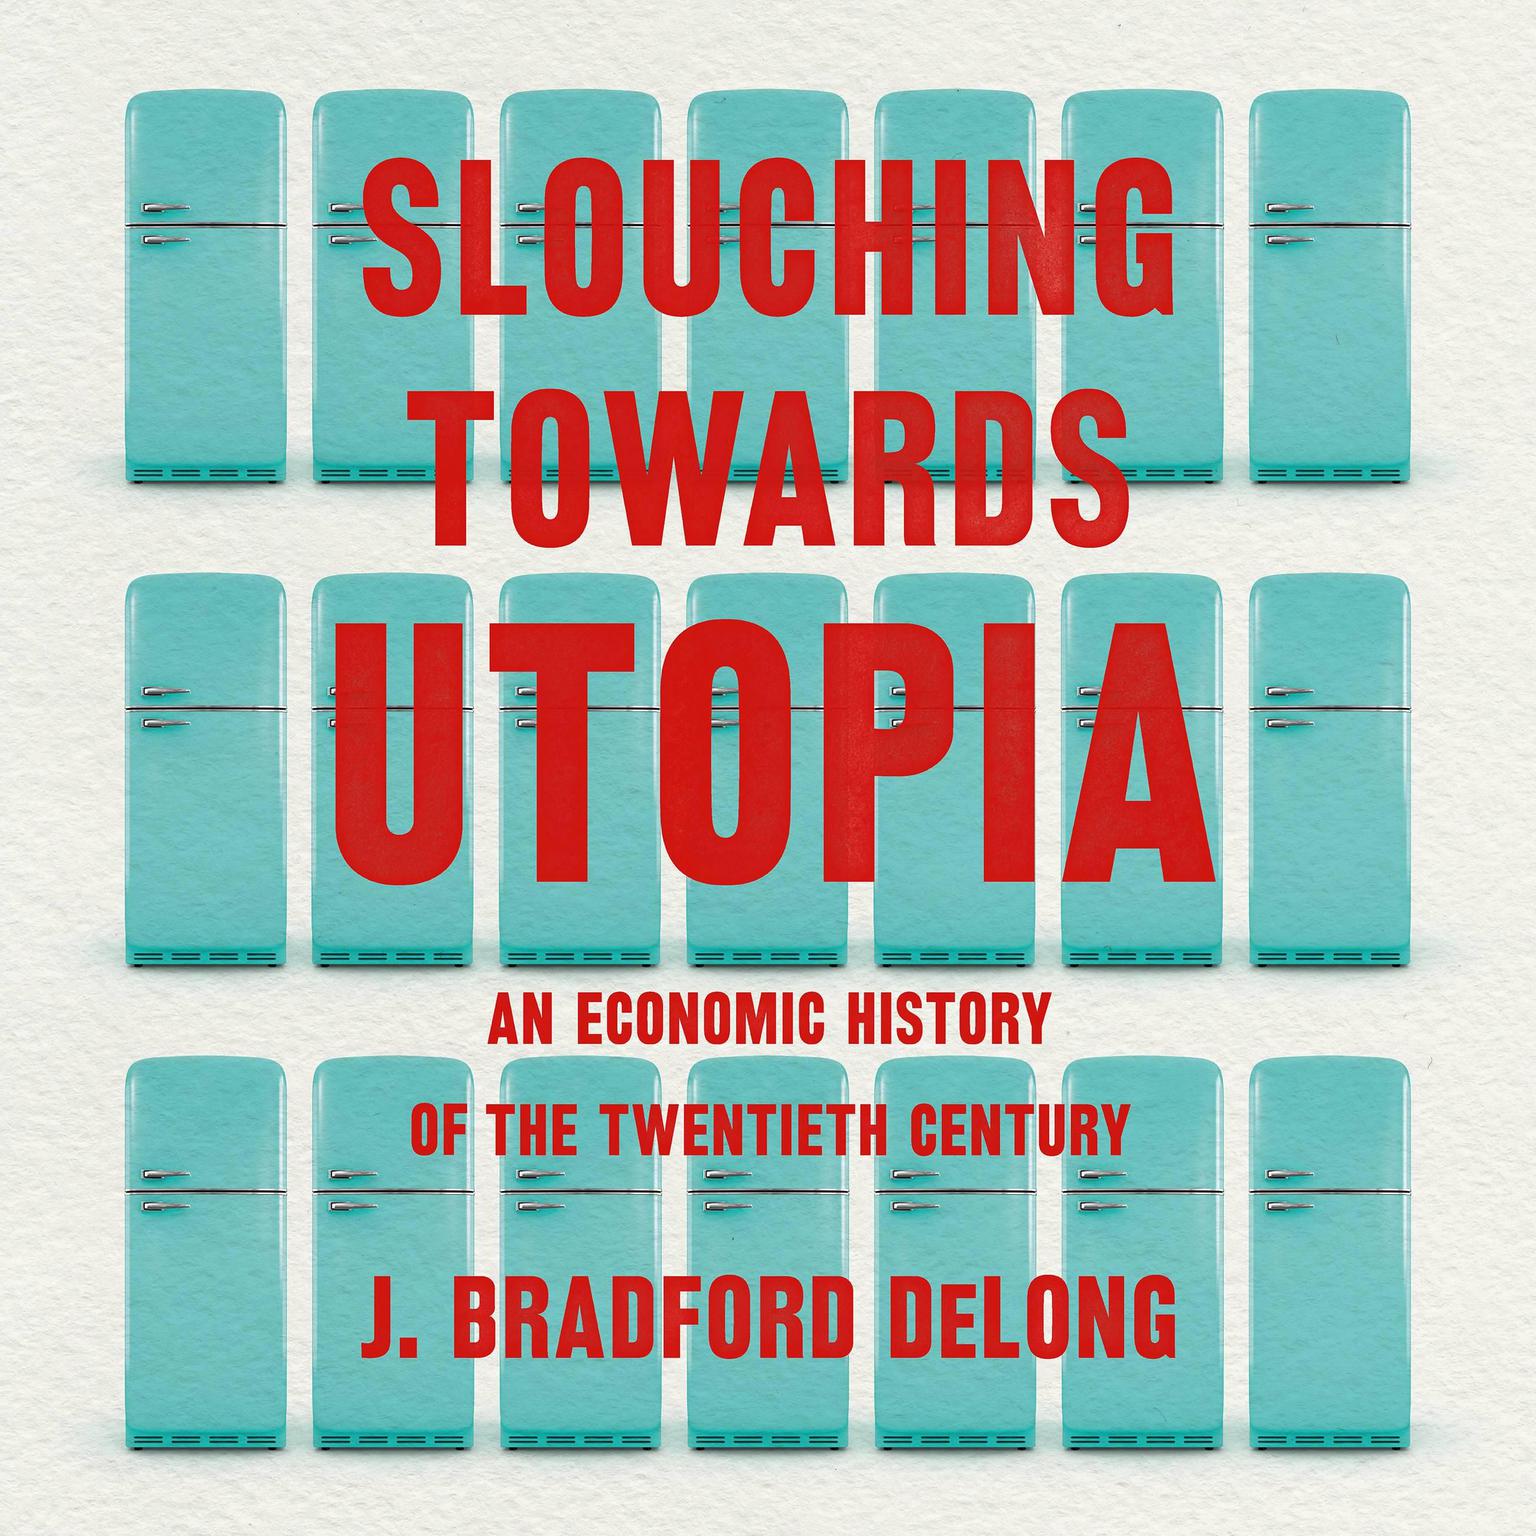 Slouching Towards Utopia: An Economic History of the Twentieth Century Audiobook, by J. Bradford DeLong